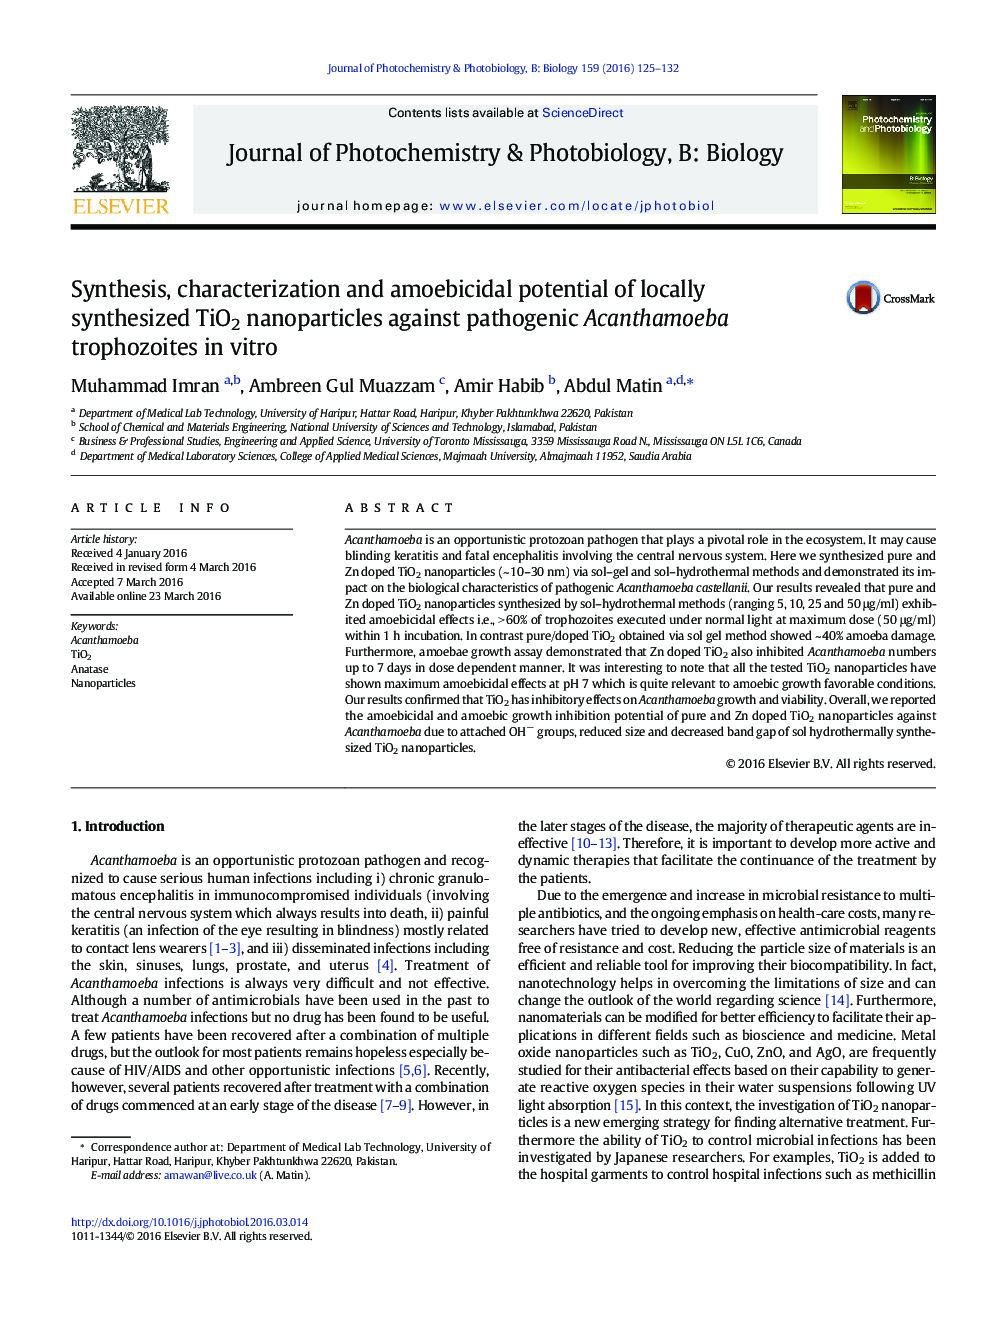 Synthesis, characterization and amoebicidal potential of locally synthesized TiO2 nanoparticles against pathogenic Acanthamoeba trophozoites in vitro